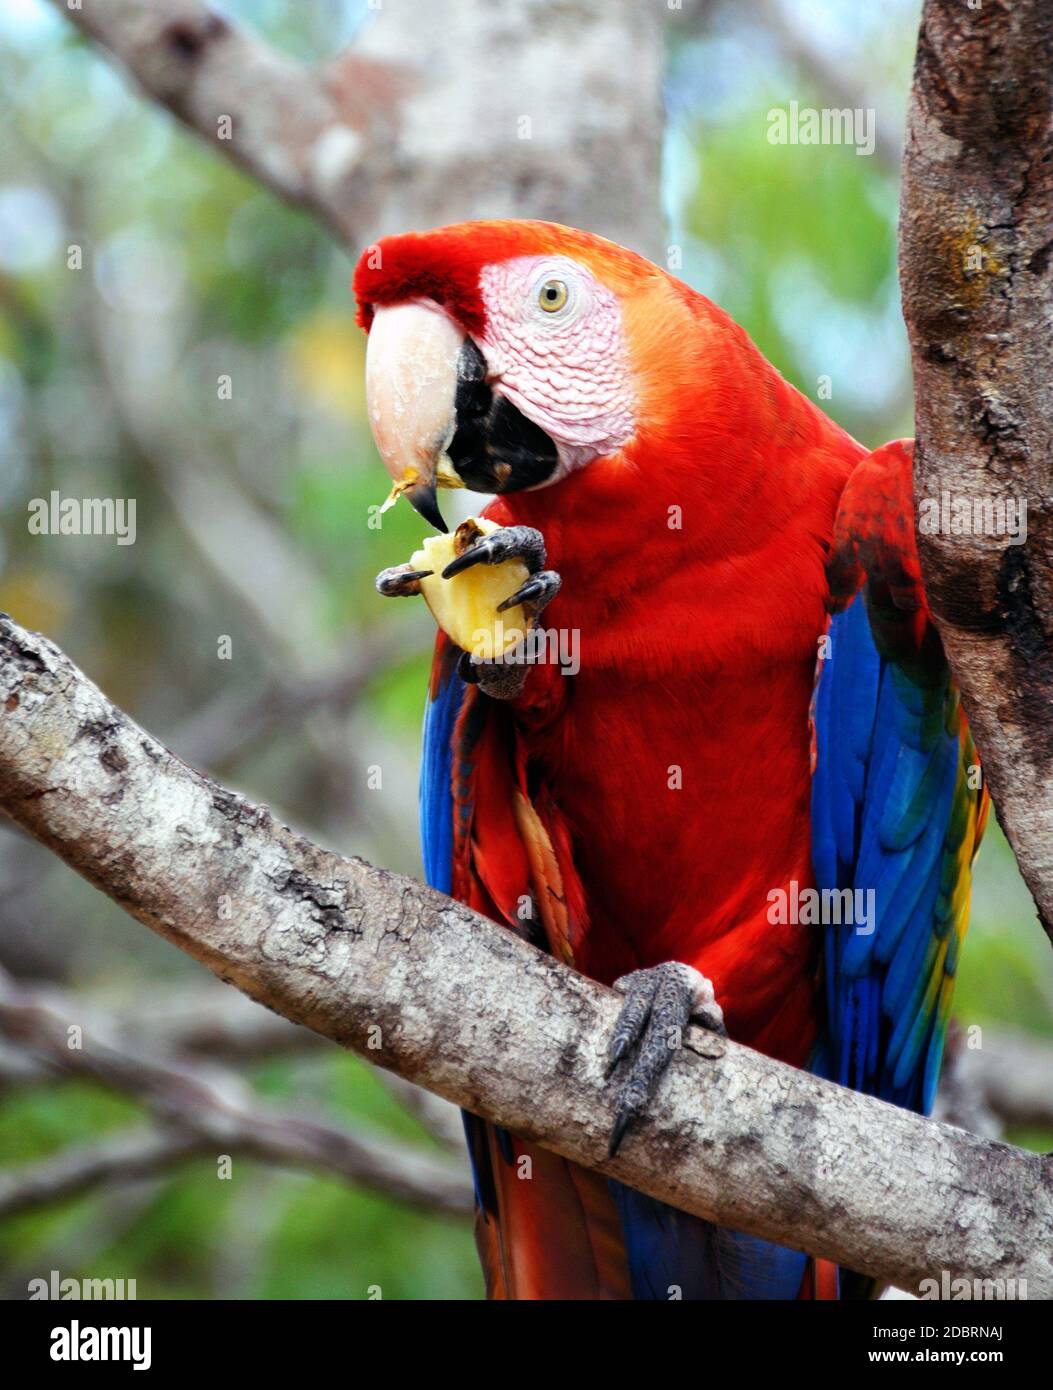 Parrot in the Amazon region of Brazil, Manaus Stock Photo